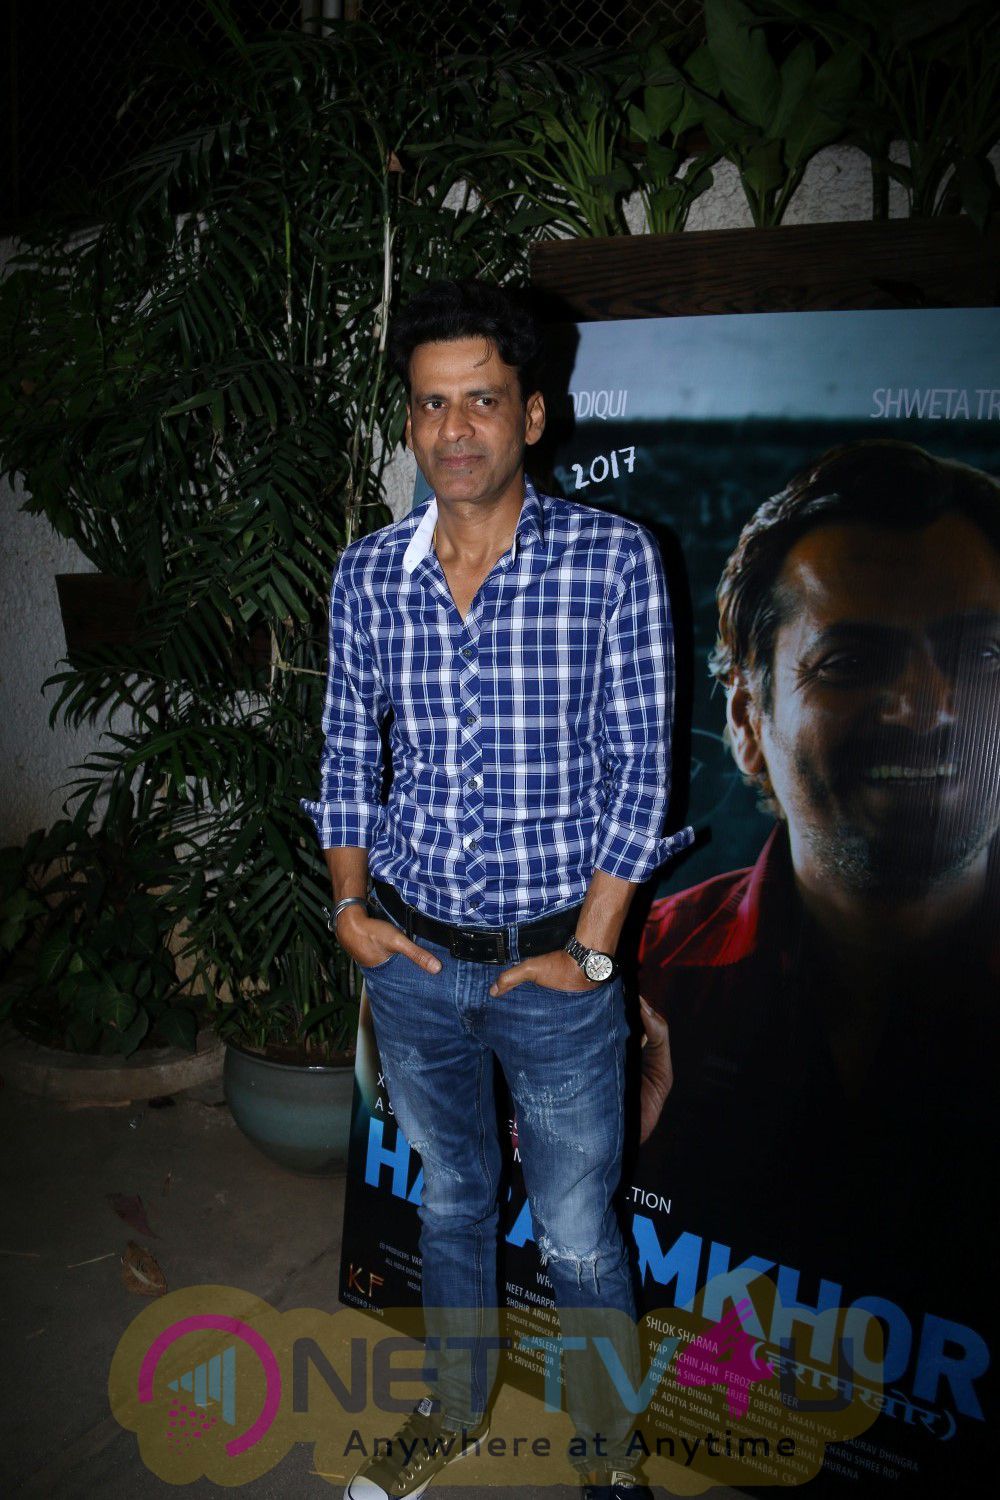 Anurag Kashyap Host Special Screening Of Haraamkhor Photos Hindi Gallery